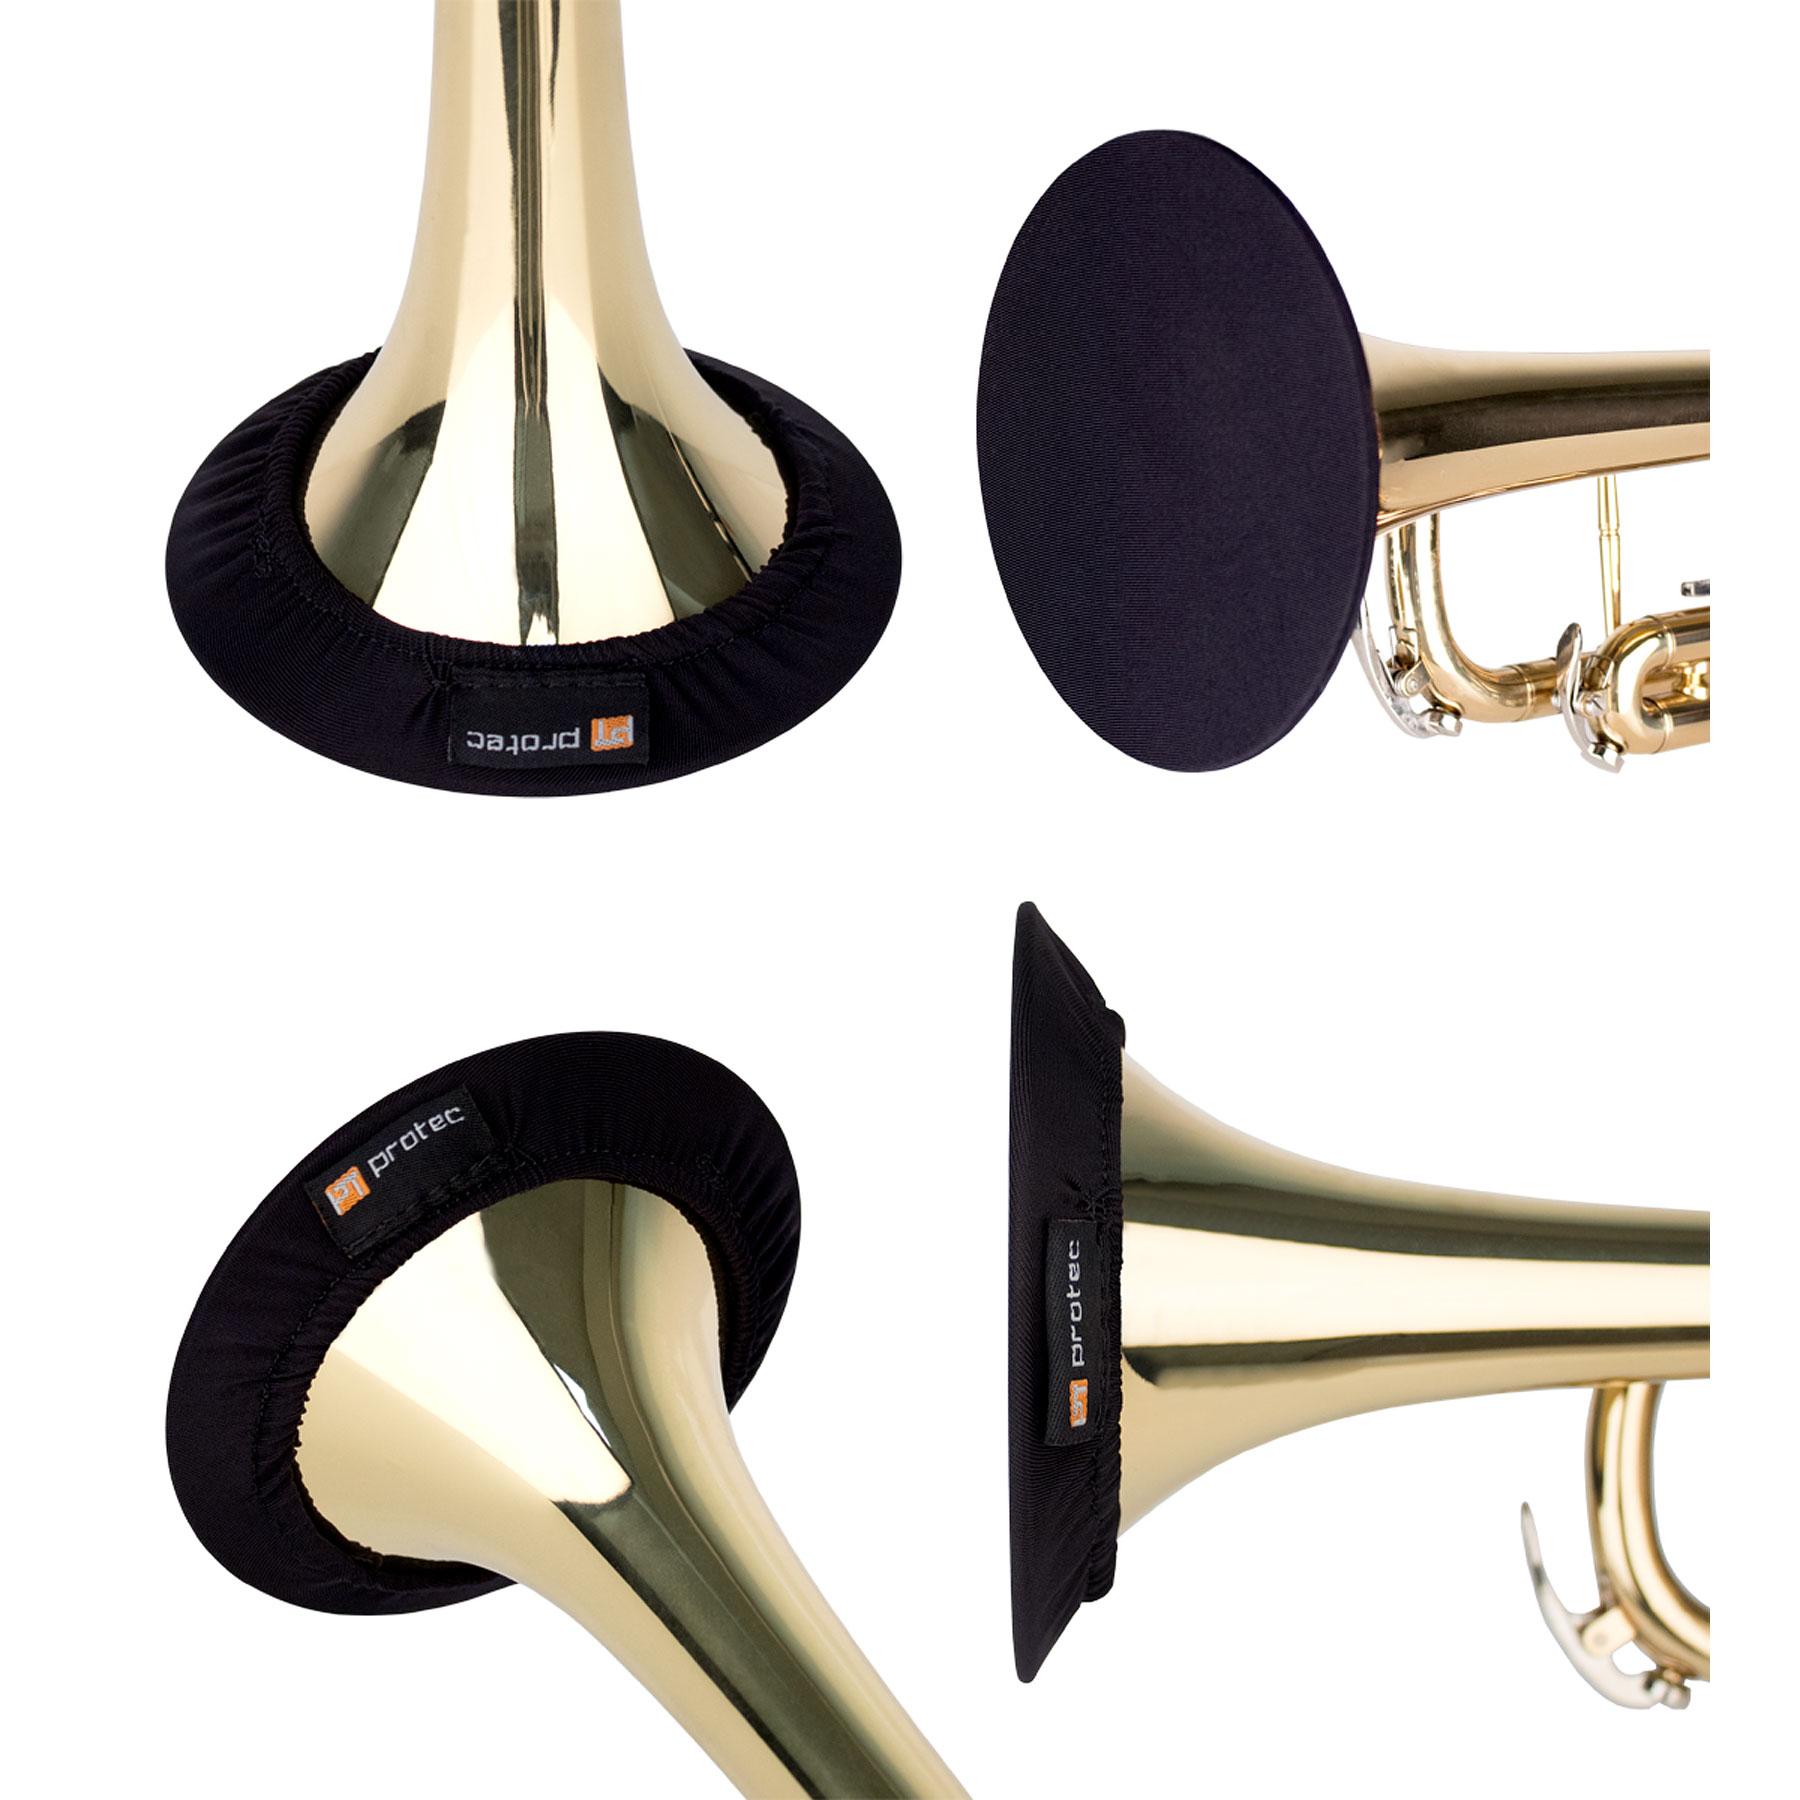 TUANTUAN 4 Pcs Reusable Trumpet Bell Cover Music Instrument Bell Covers Protective Trumpet Bell Covers Black 5 Inch Bell Covers for Alto Saxophone Trumpet Bass Clarinet Cornet 